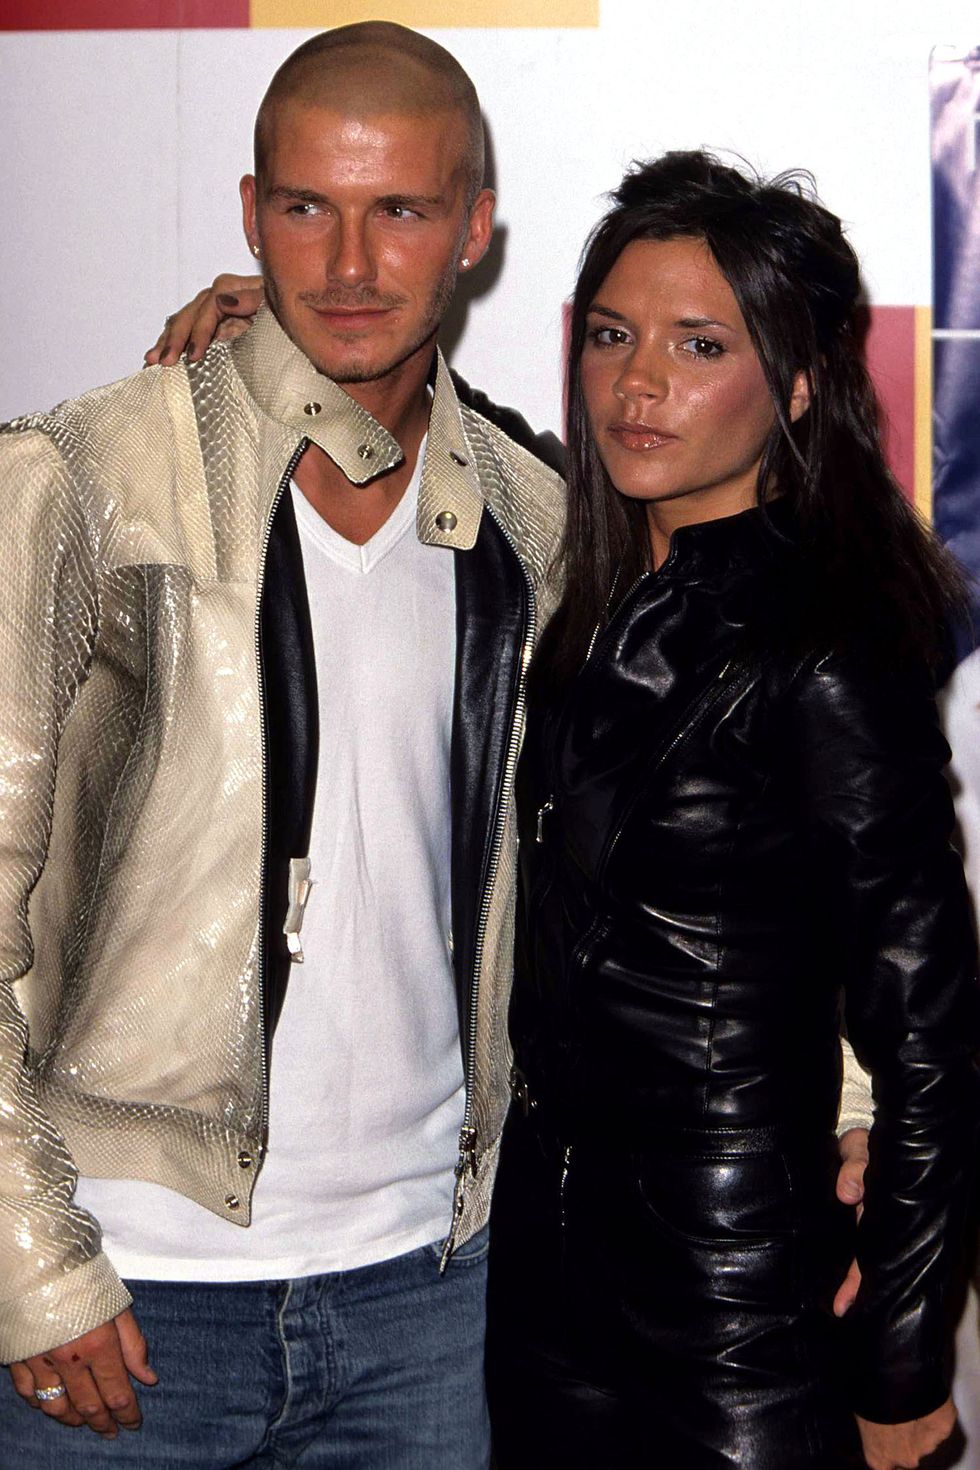 Throwback photos of David Beckham and Victoria Beckham